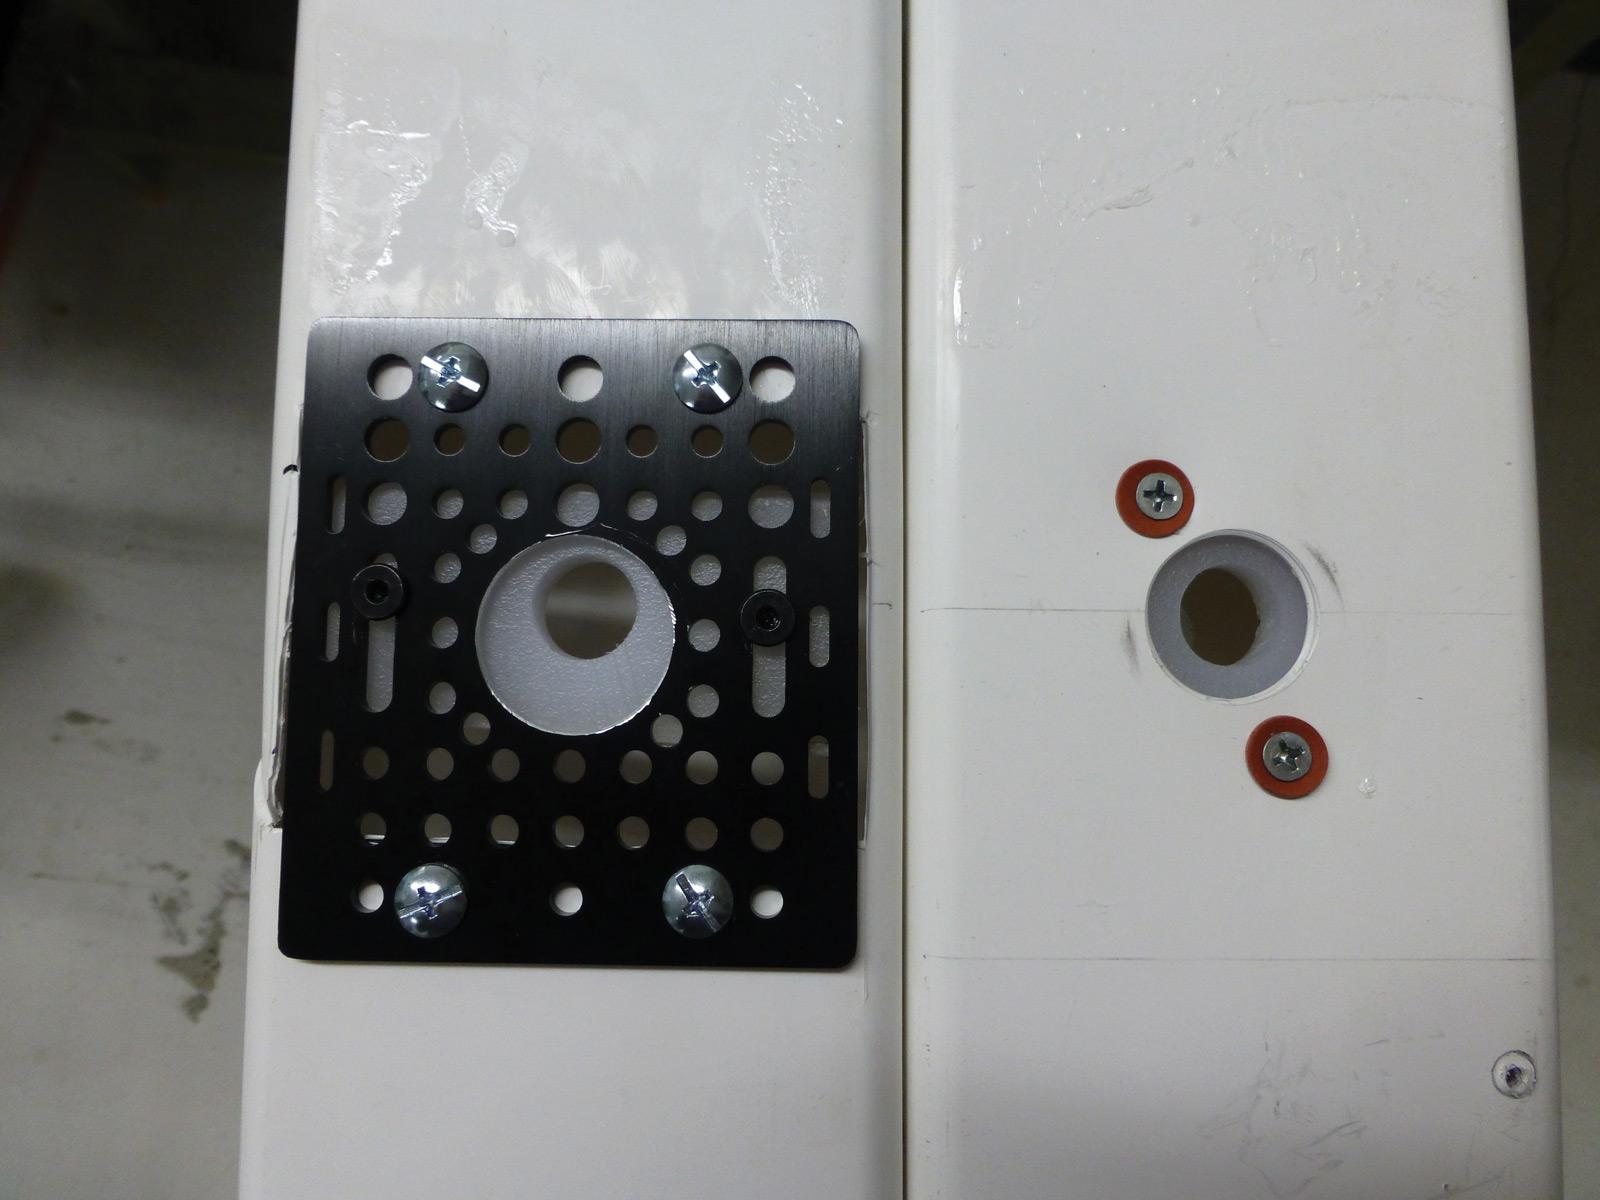 Maker plates allow vertical adjustment